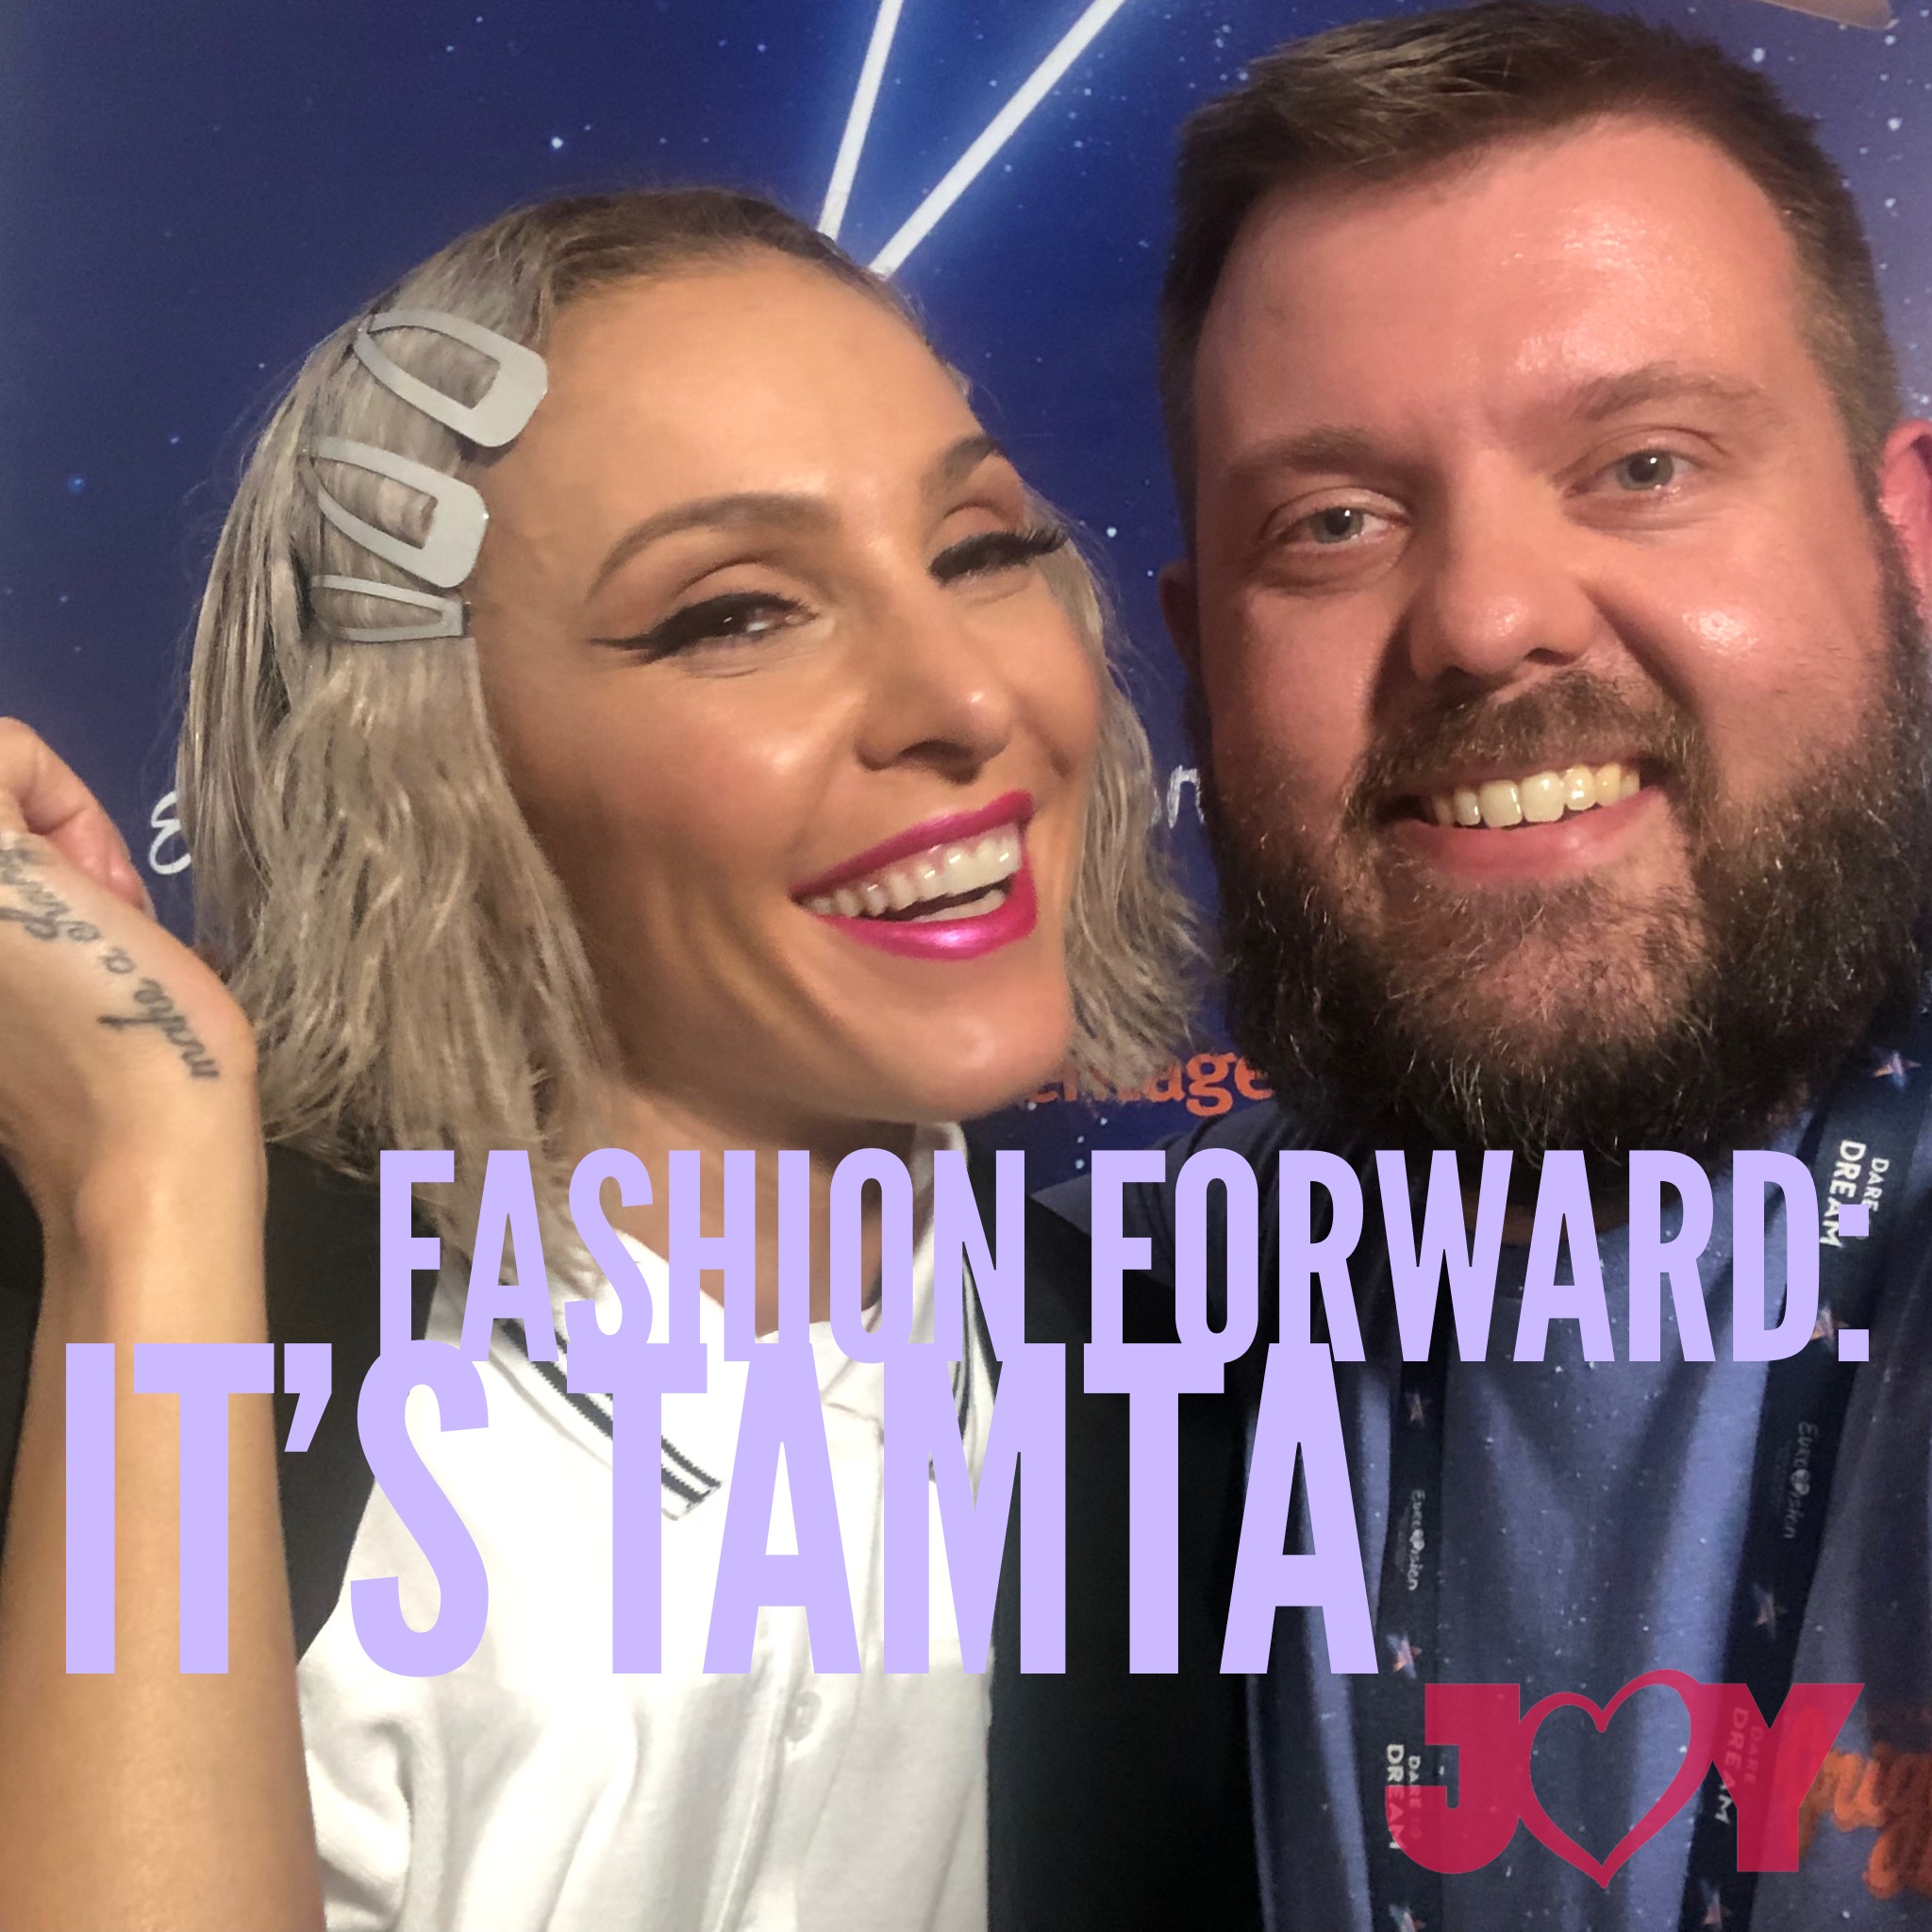 Fashion Forward: It’s Tamta